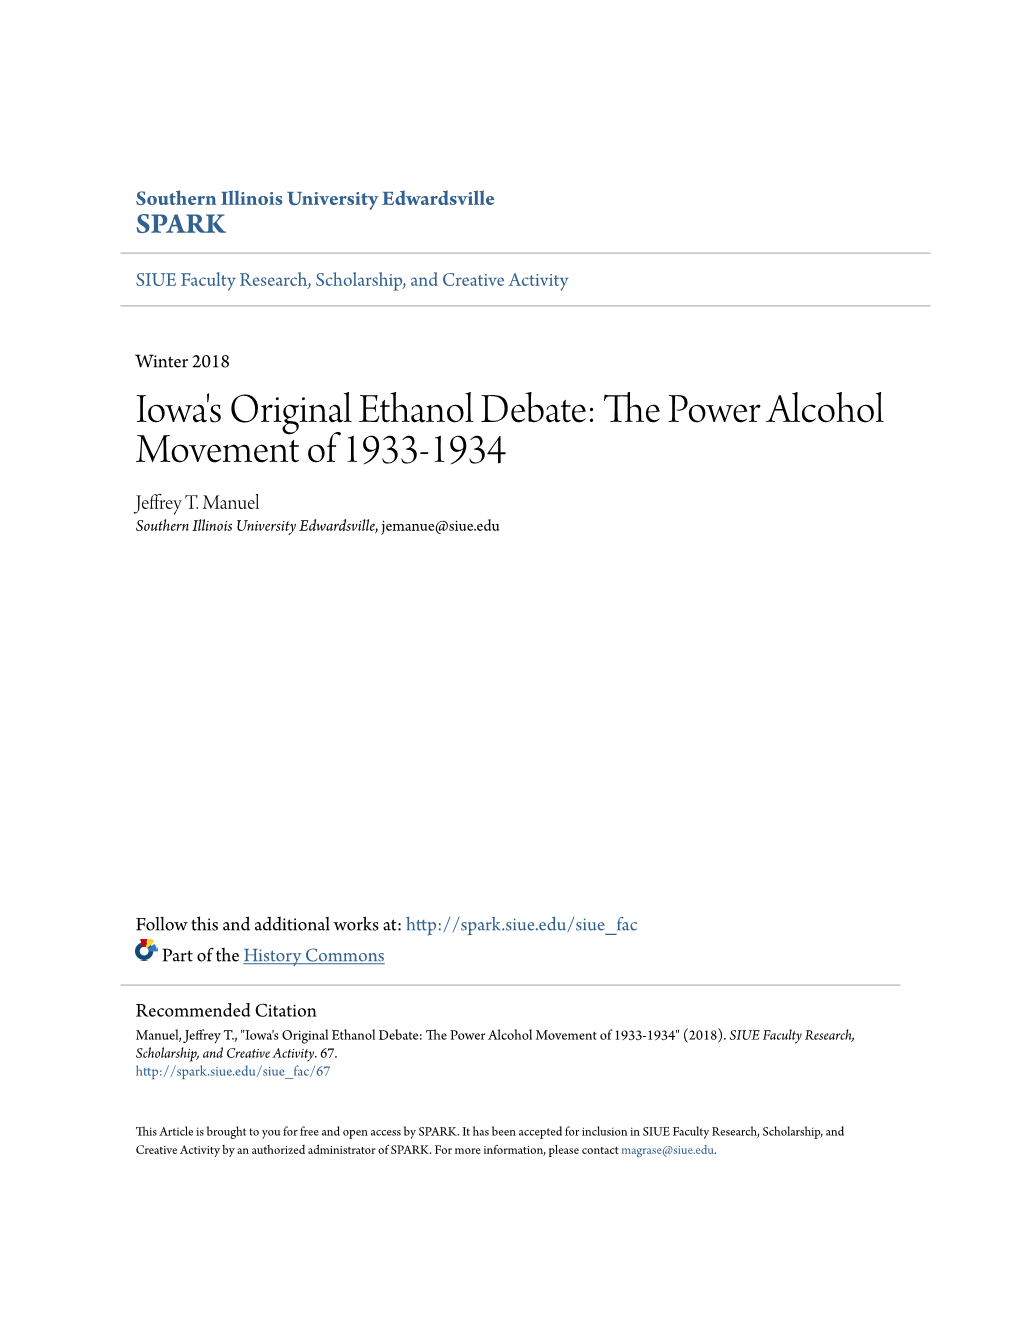 Iowa's Original Ethanol Debate: the Op Wer Alcohol Movement of 1933-1934 Jeffrey T